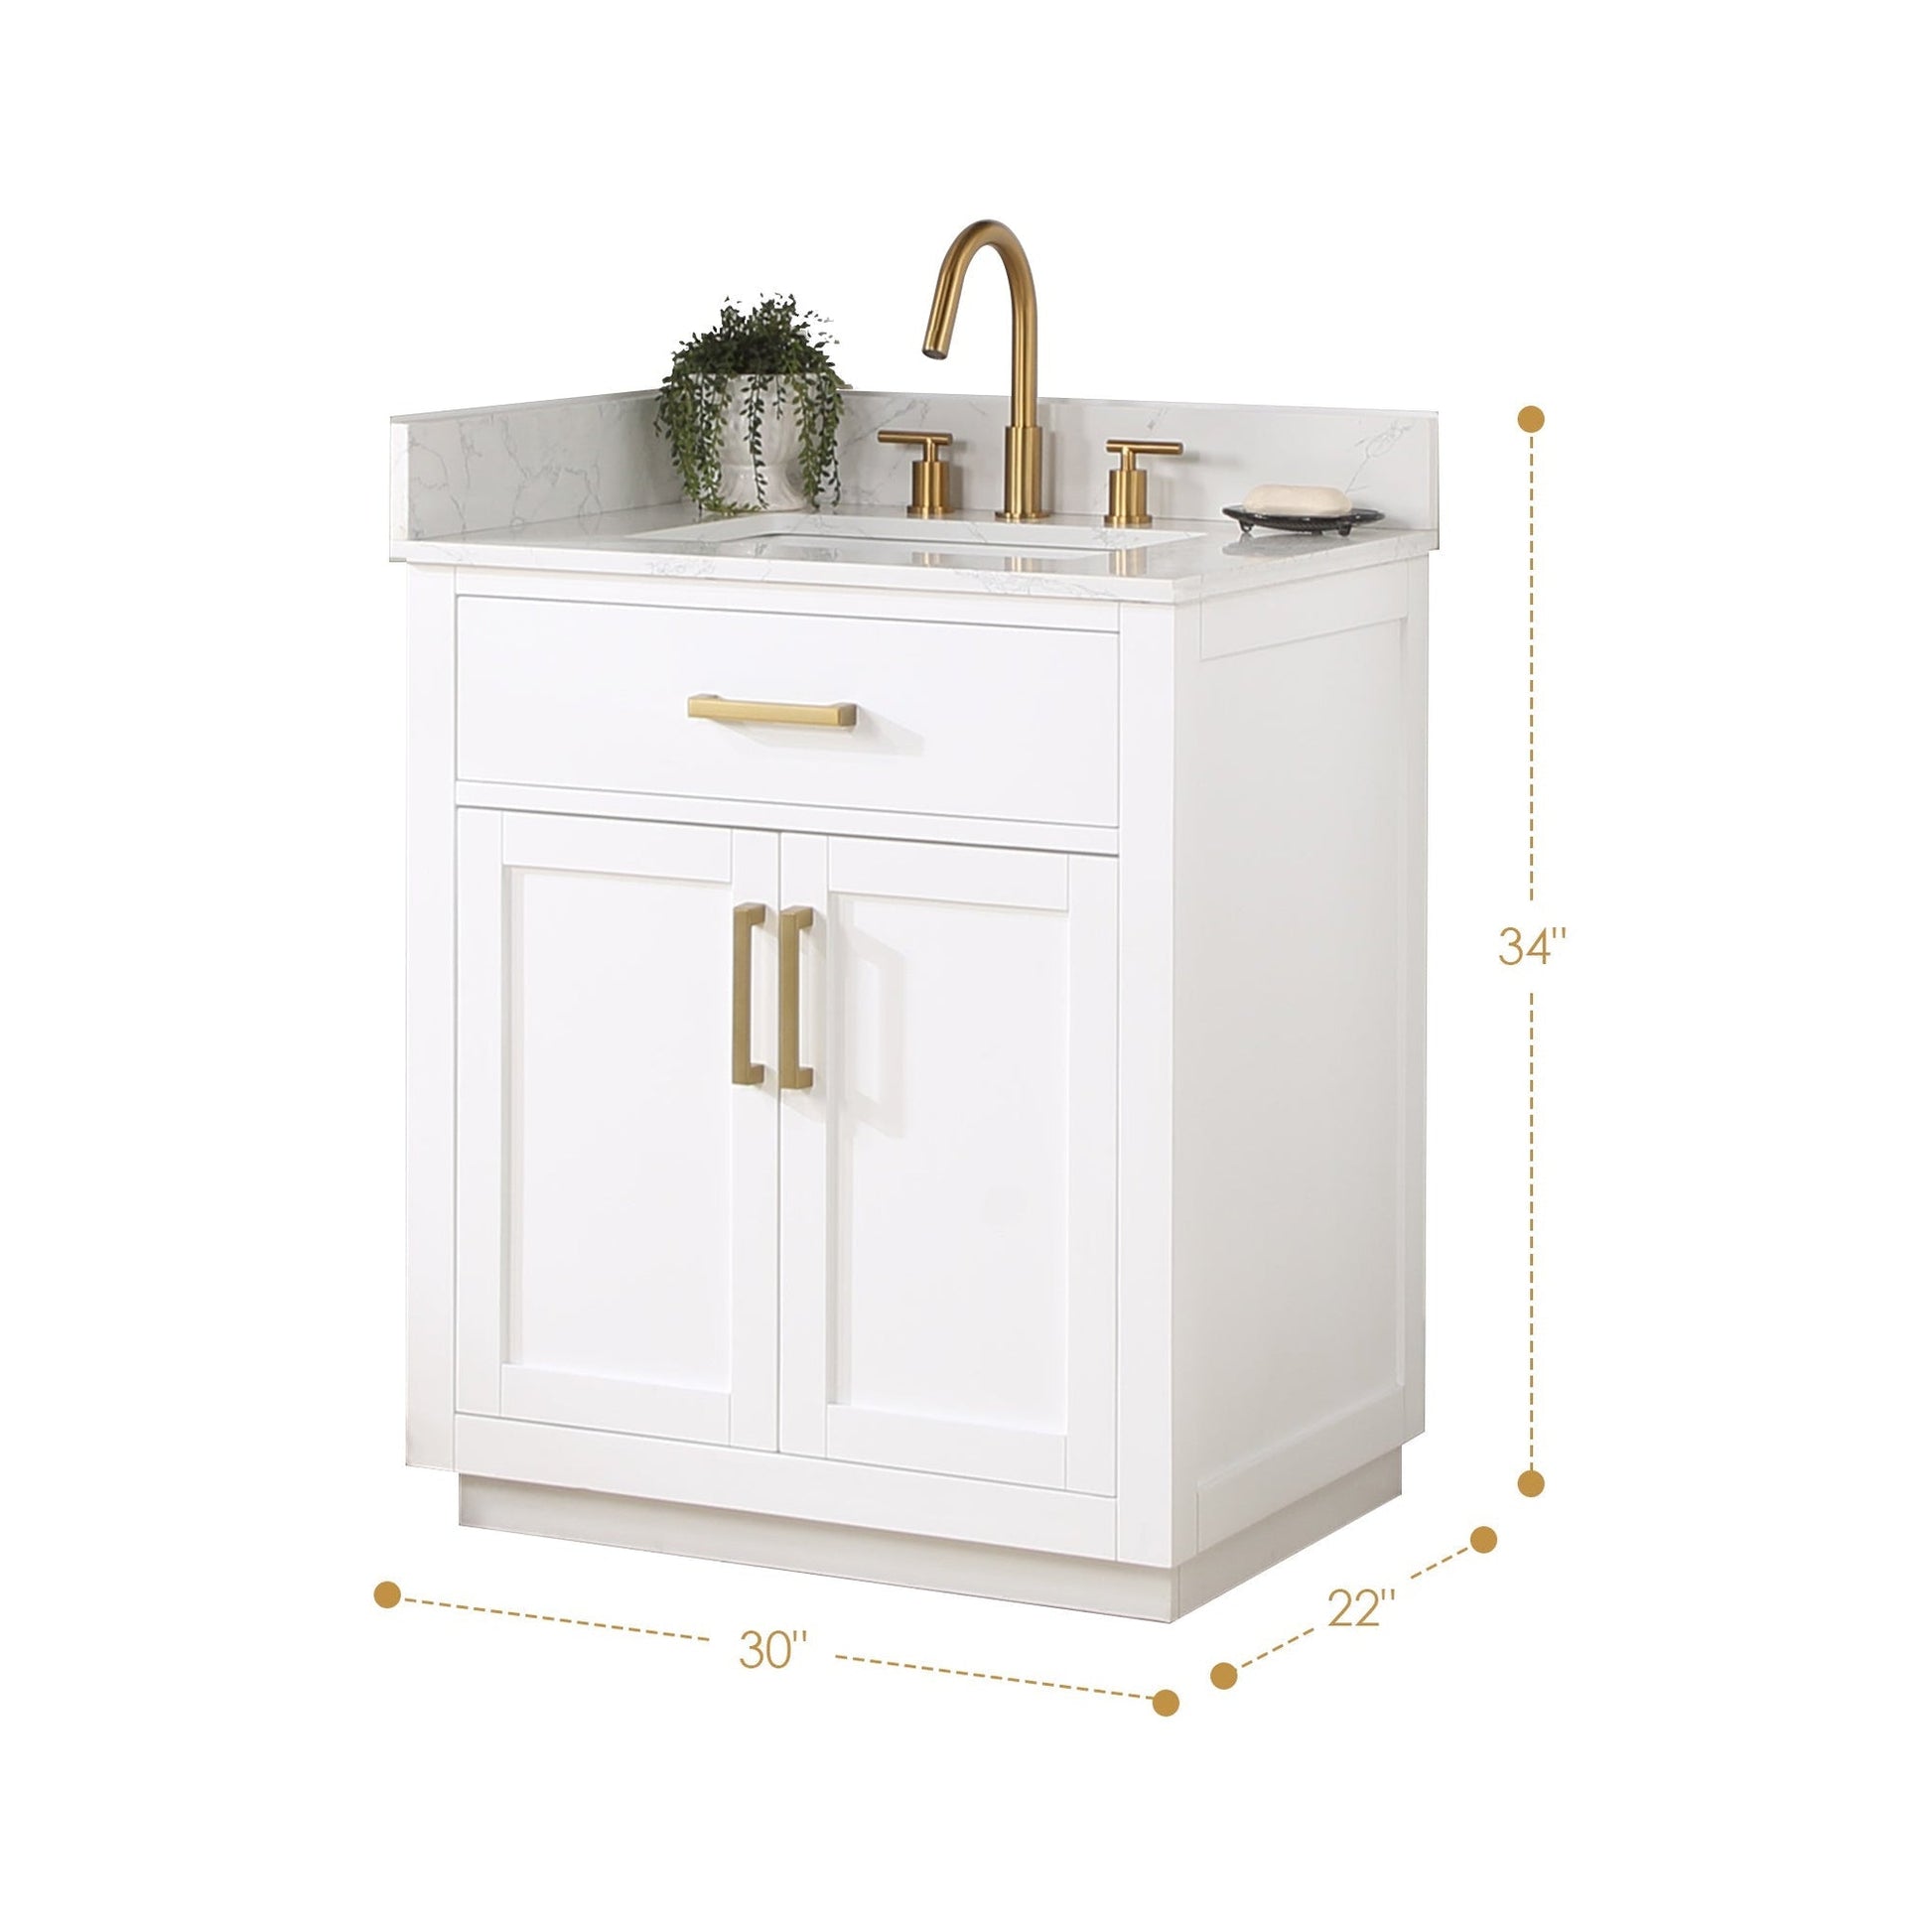 Altair Gavino 30" White Freestanding Single Bathroom Vanity Set With Grain White Composite Stone Top, Single Rectangular Undermount Ceramic Sink, Overflow, Sidesplash, and Backsplash